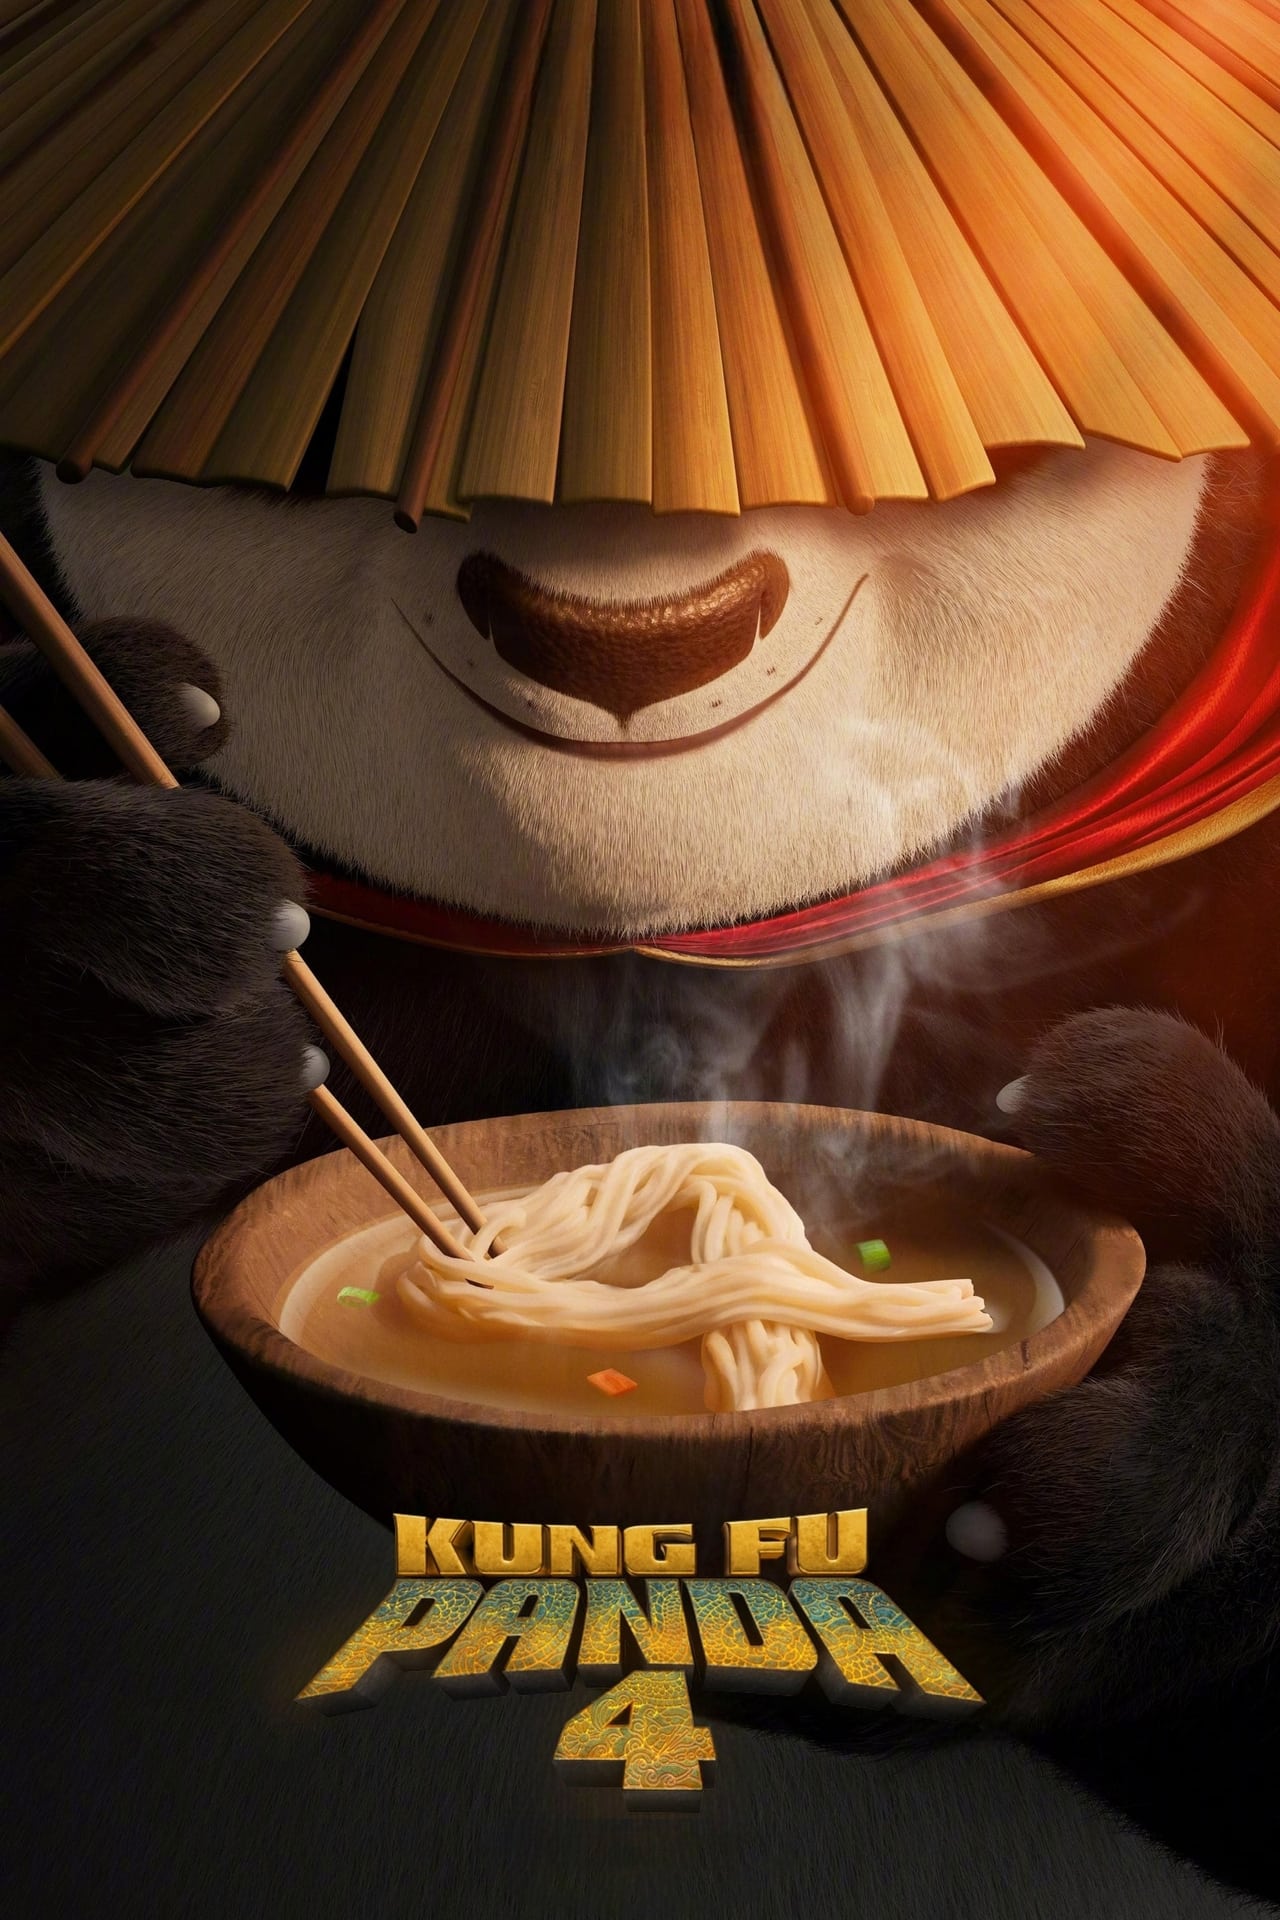 A new trilogy following “Kung Fu Panda 4” – Beacon